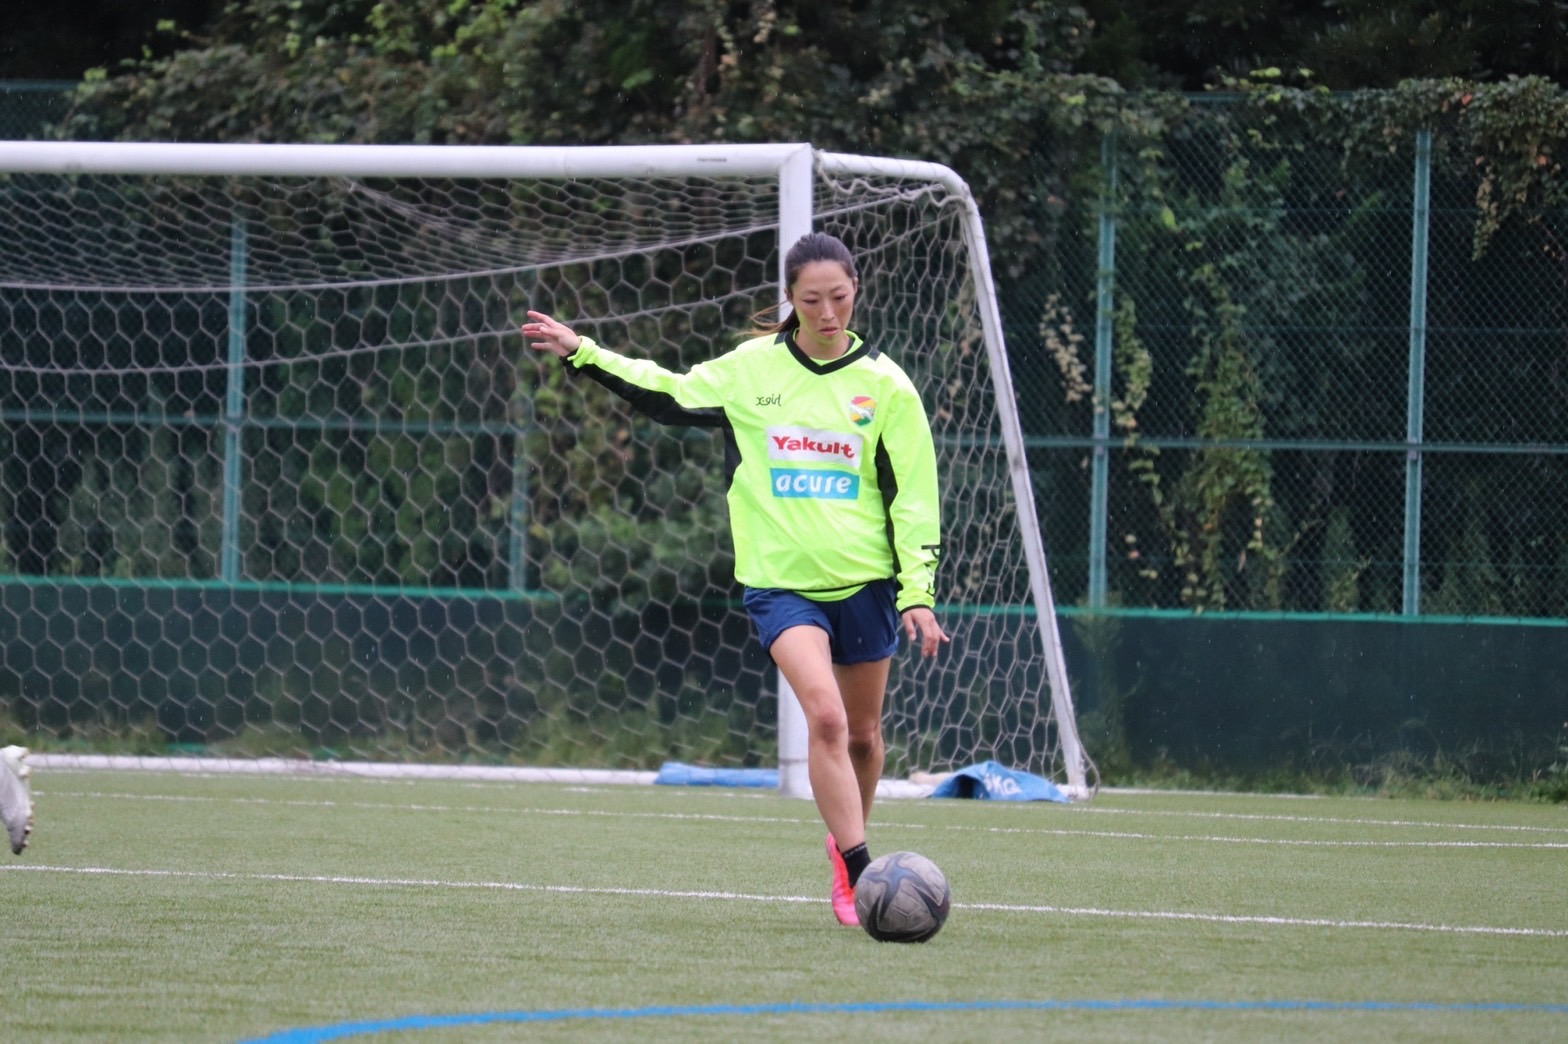 Japanese female soccer player kicks a ball